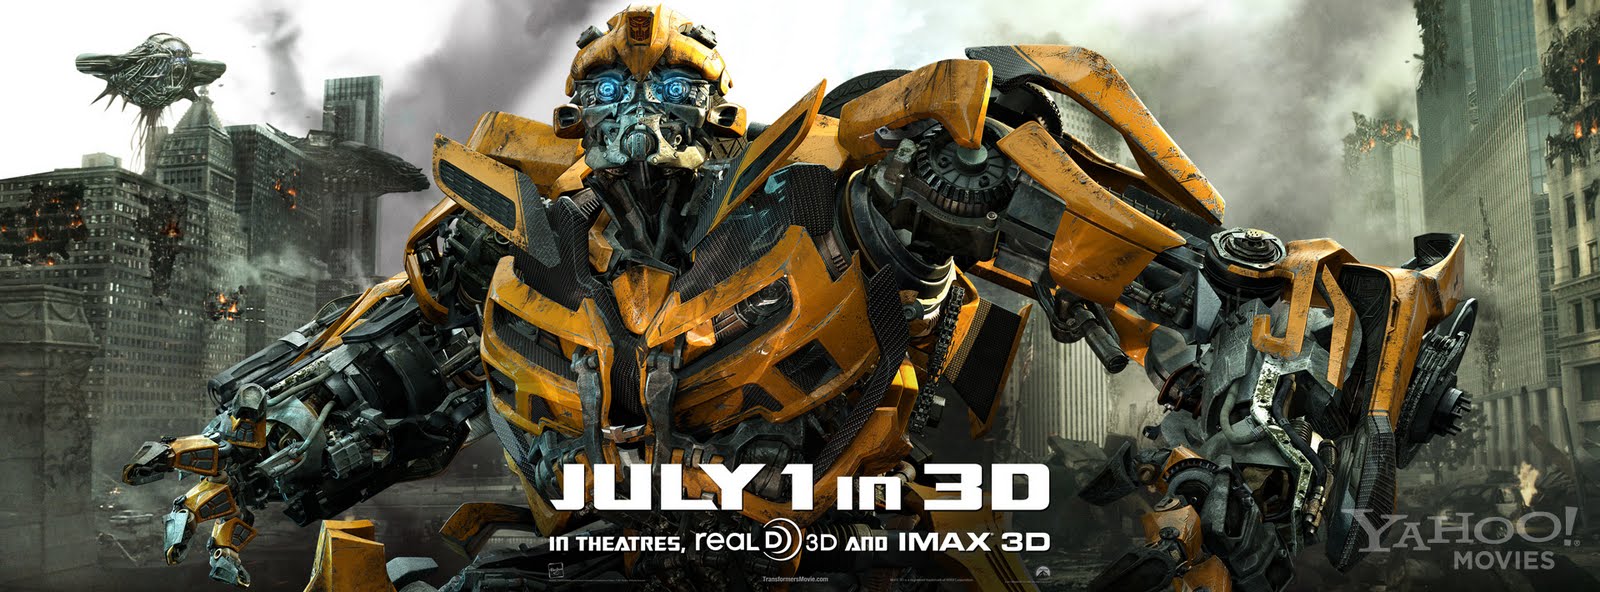 Transformers 3 full movie free